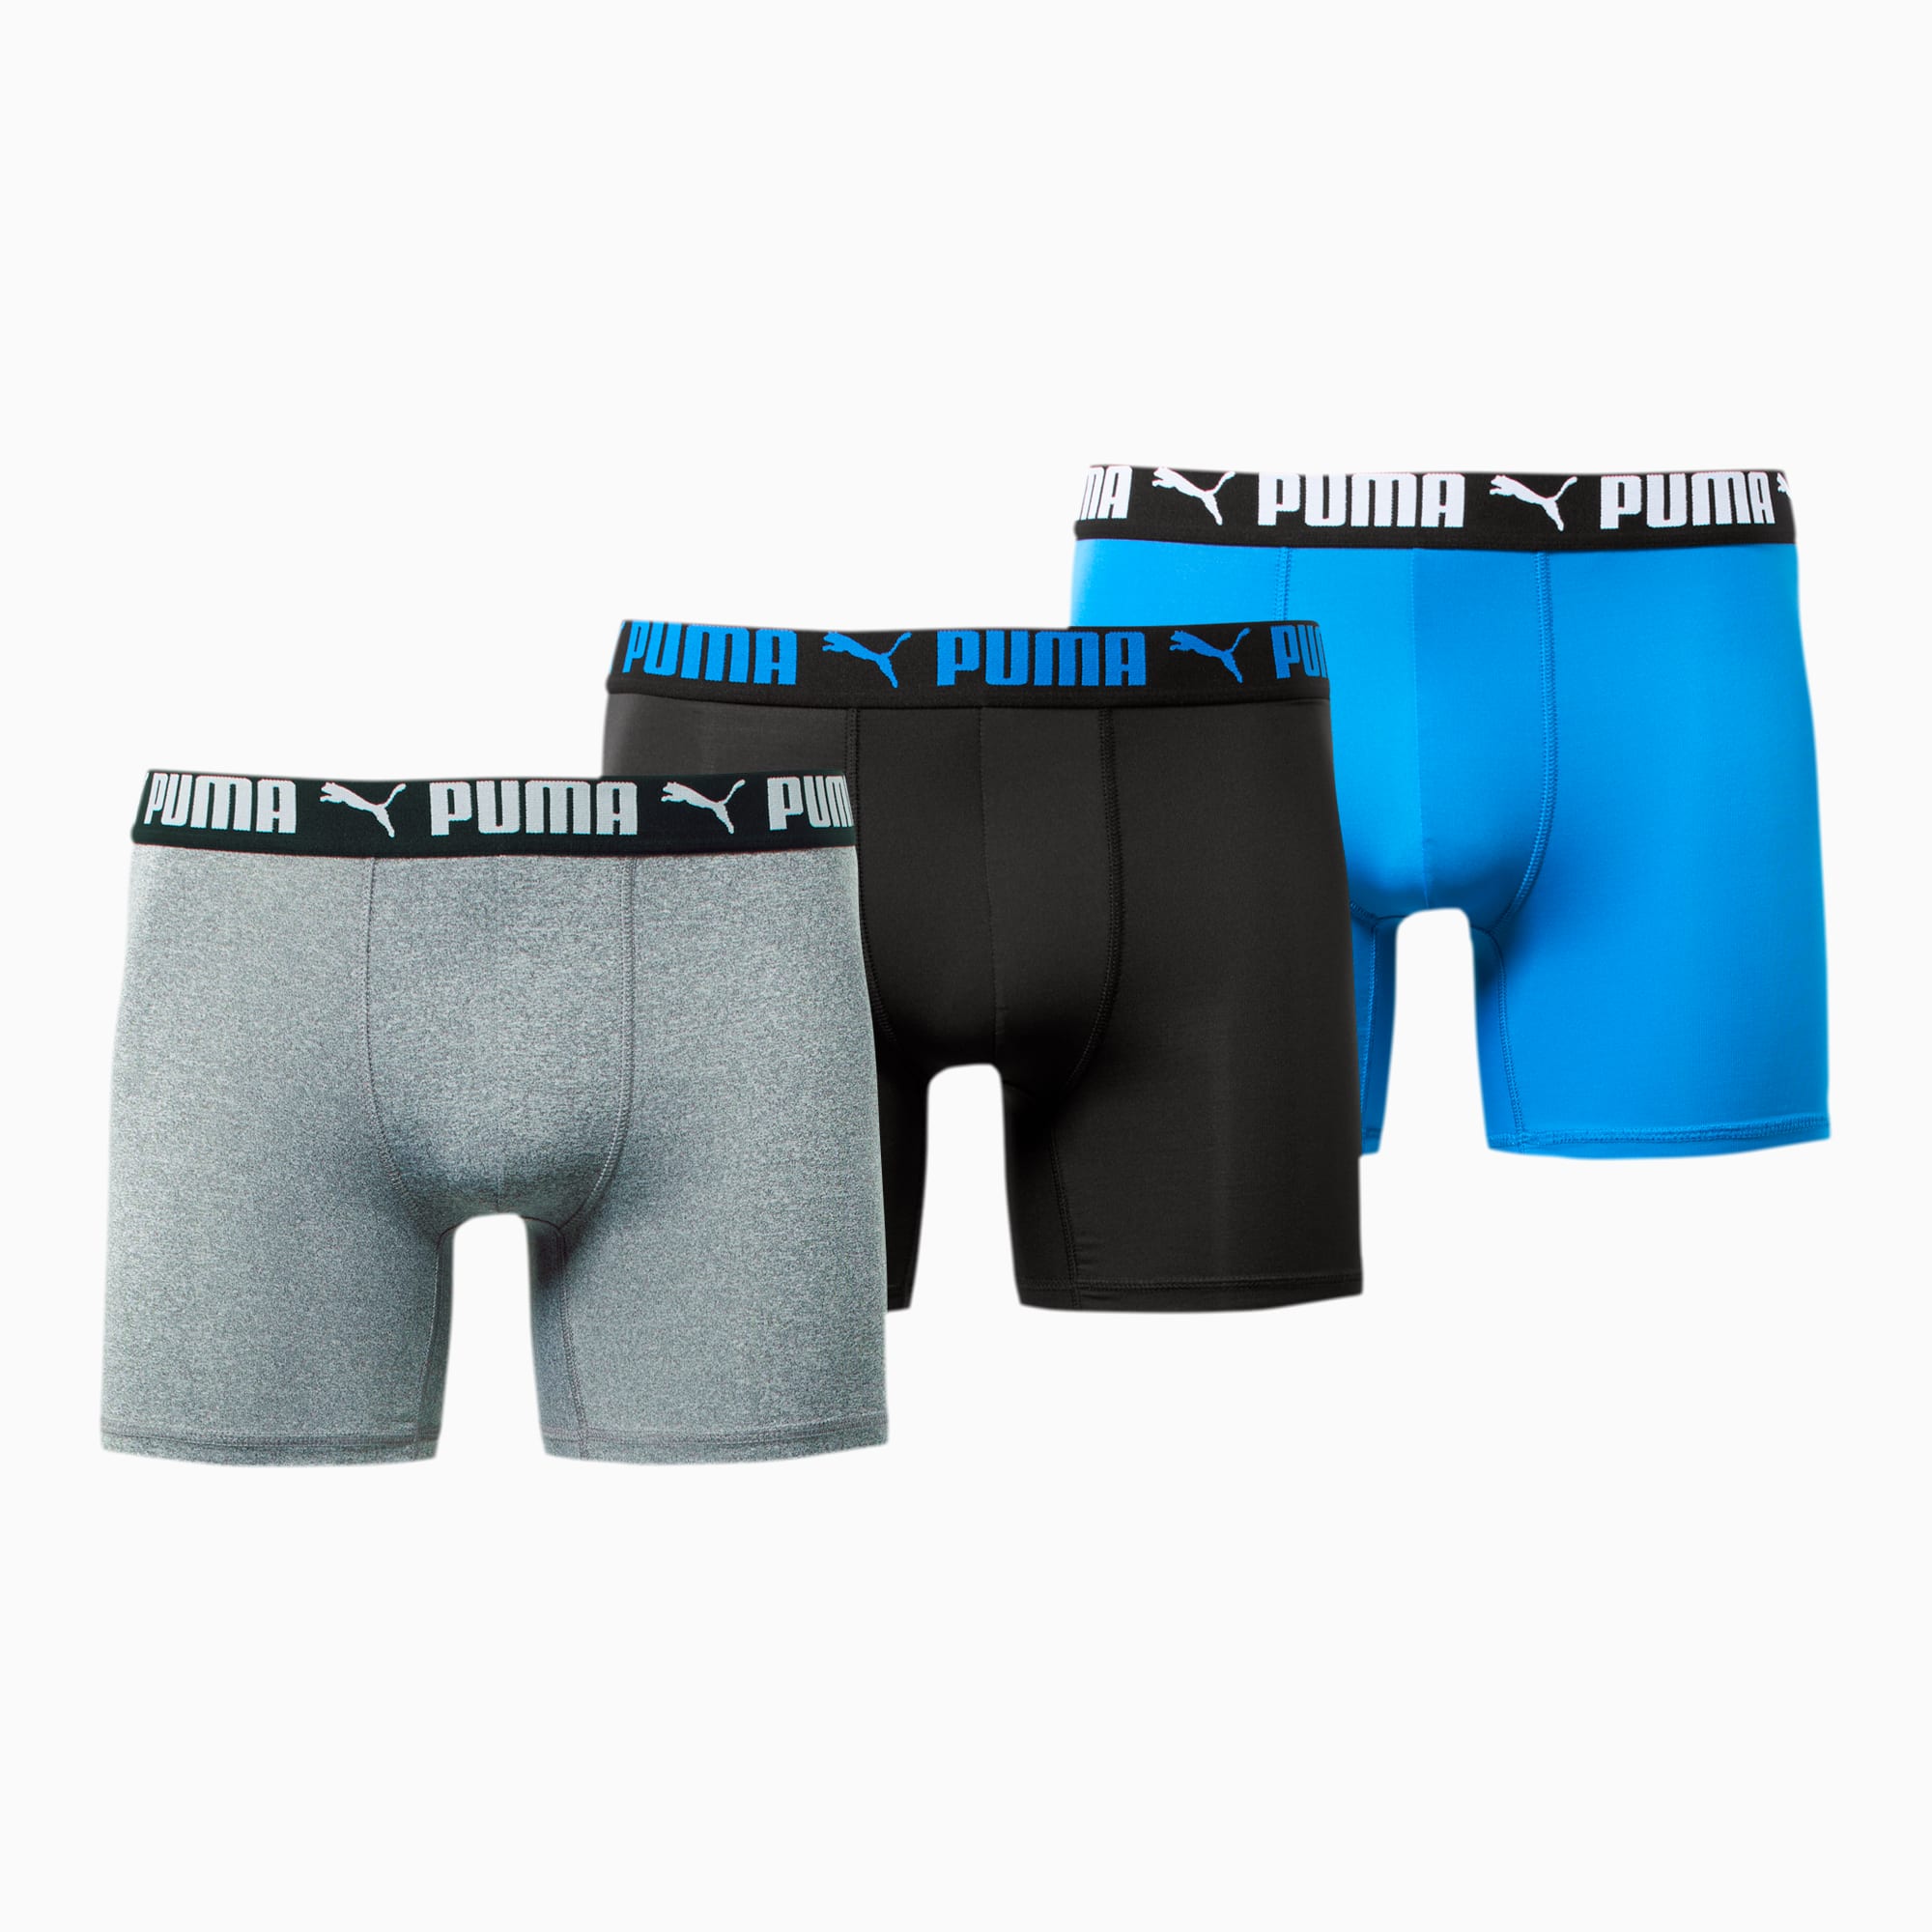 puma boxer shorts